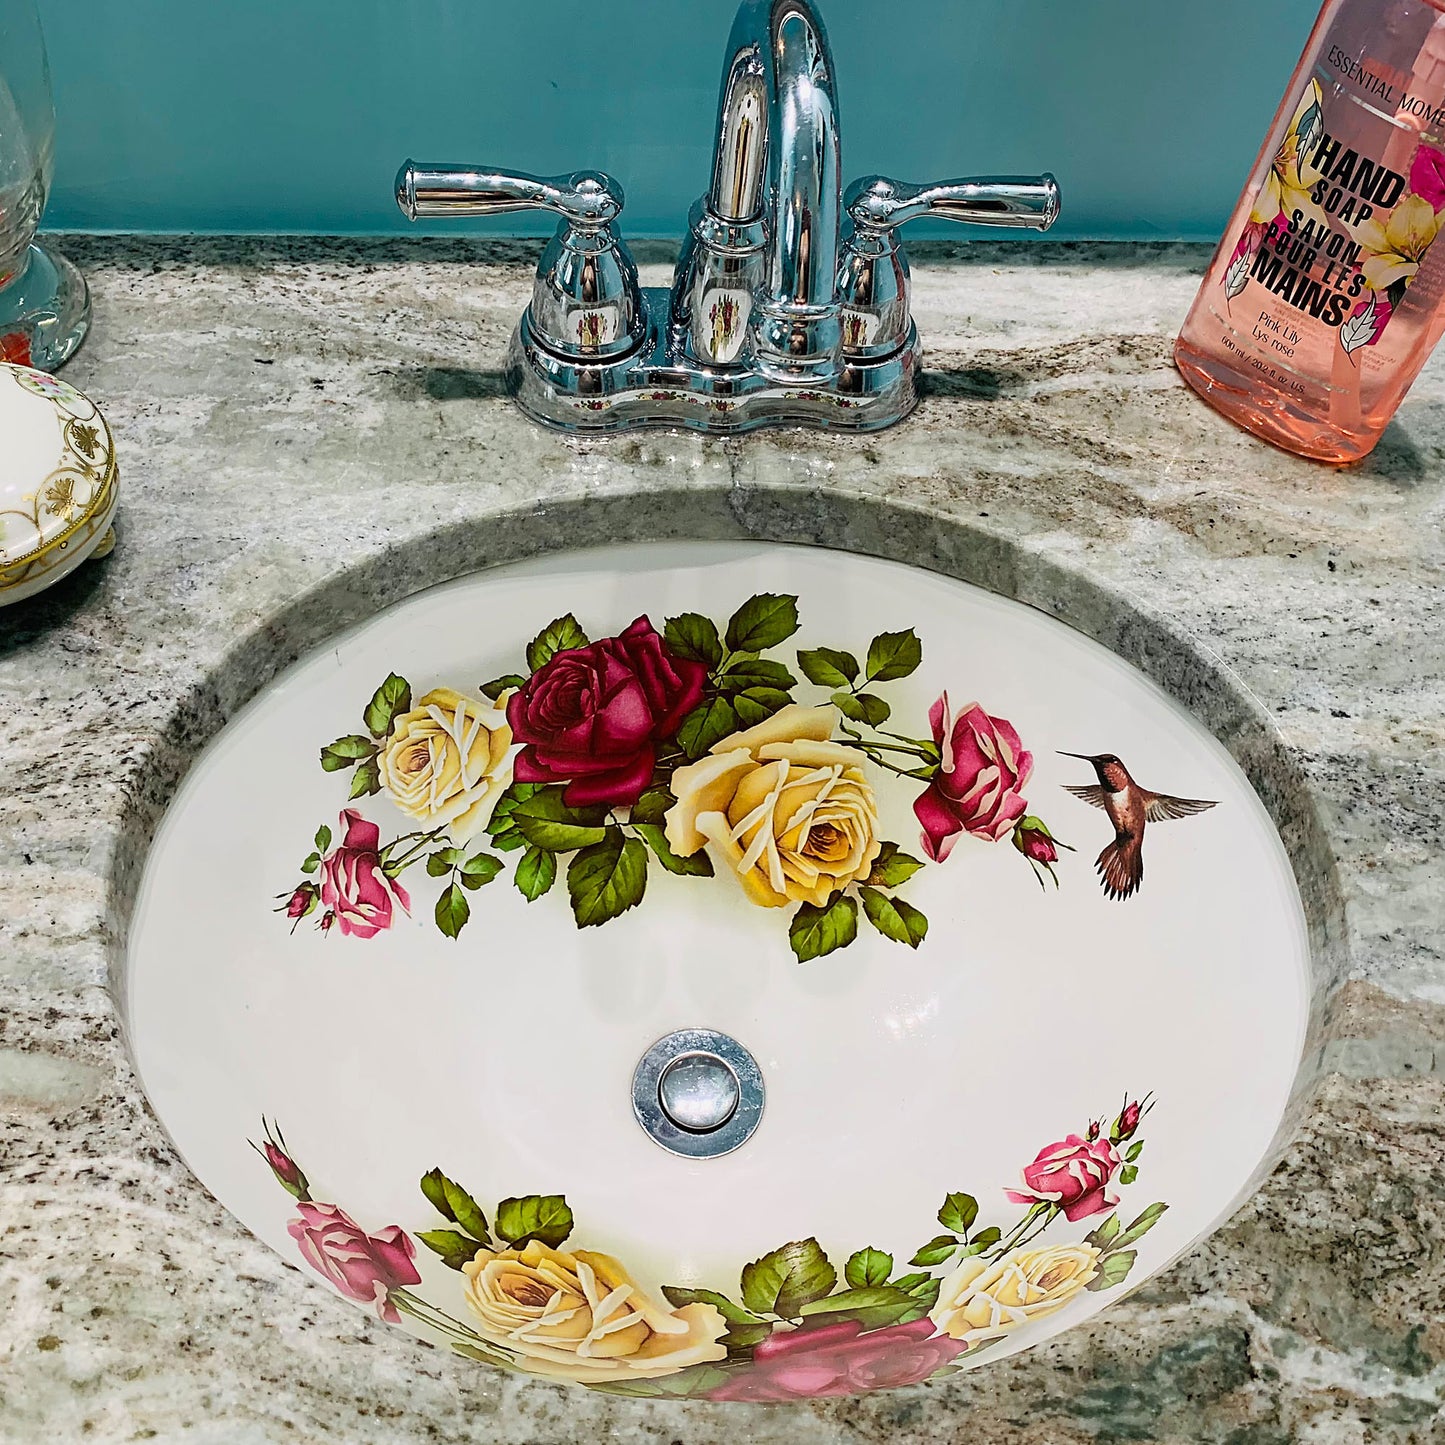 Custom bathroom with roses painted sink and hummingbird